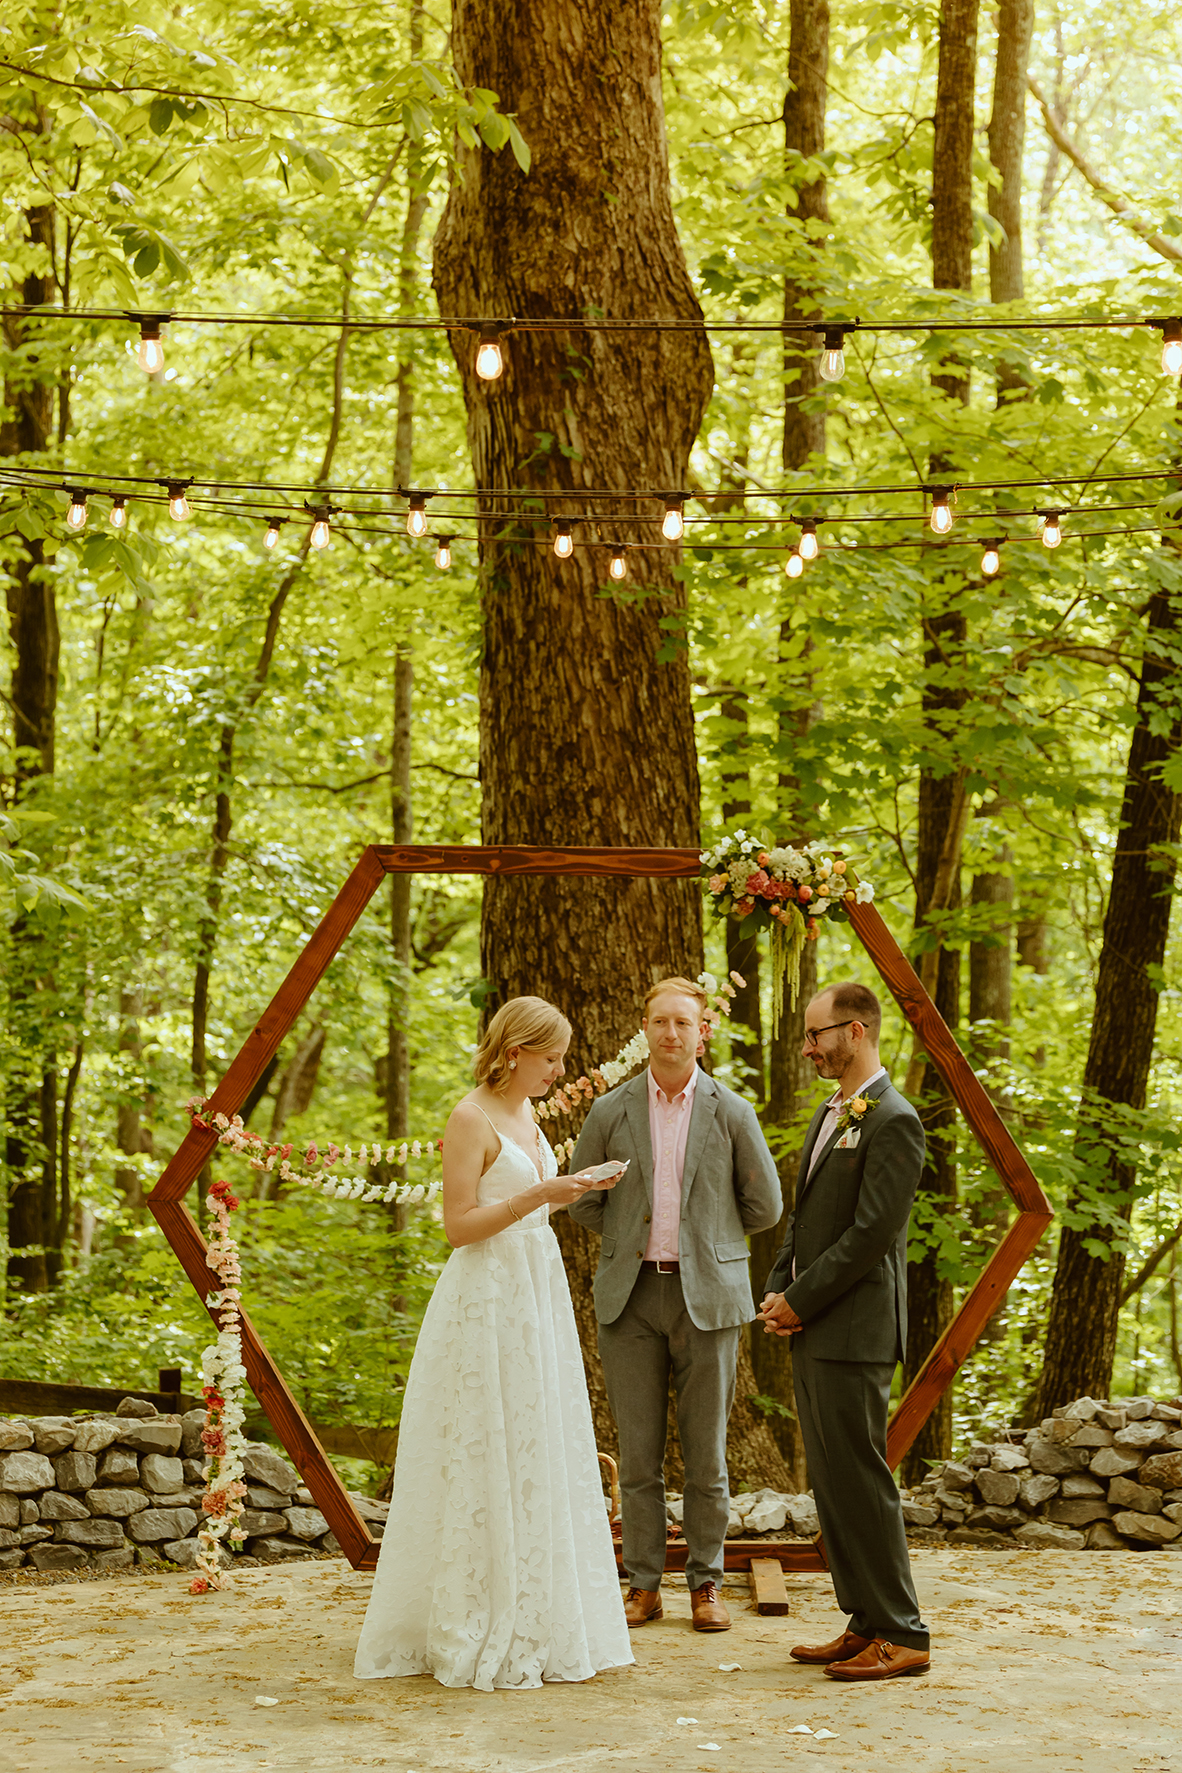 Forest wedding ceremony with hexagon arbor